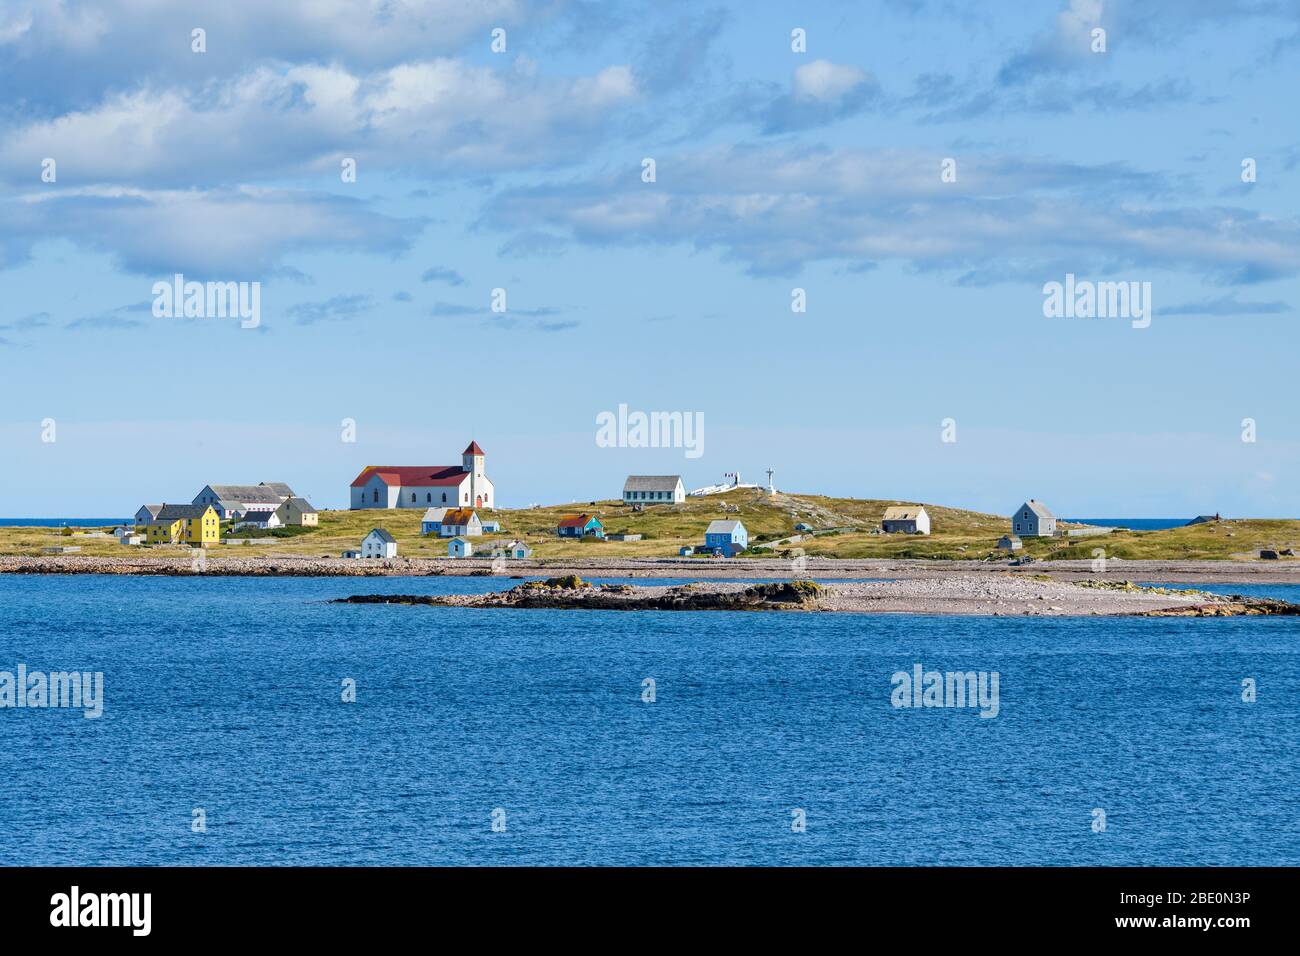 New France, St-PIerre et Miquelon, Canadian Maritimes. Town on the ocean. Stock Photo